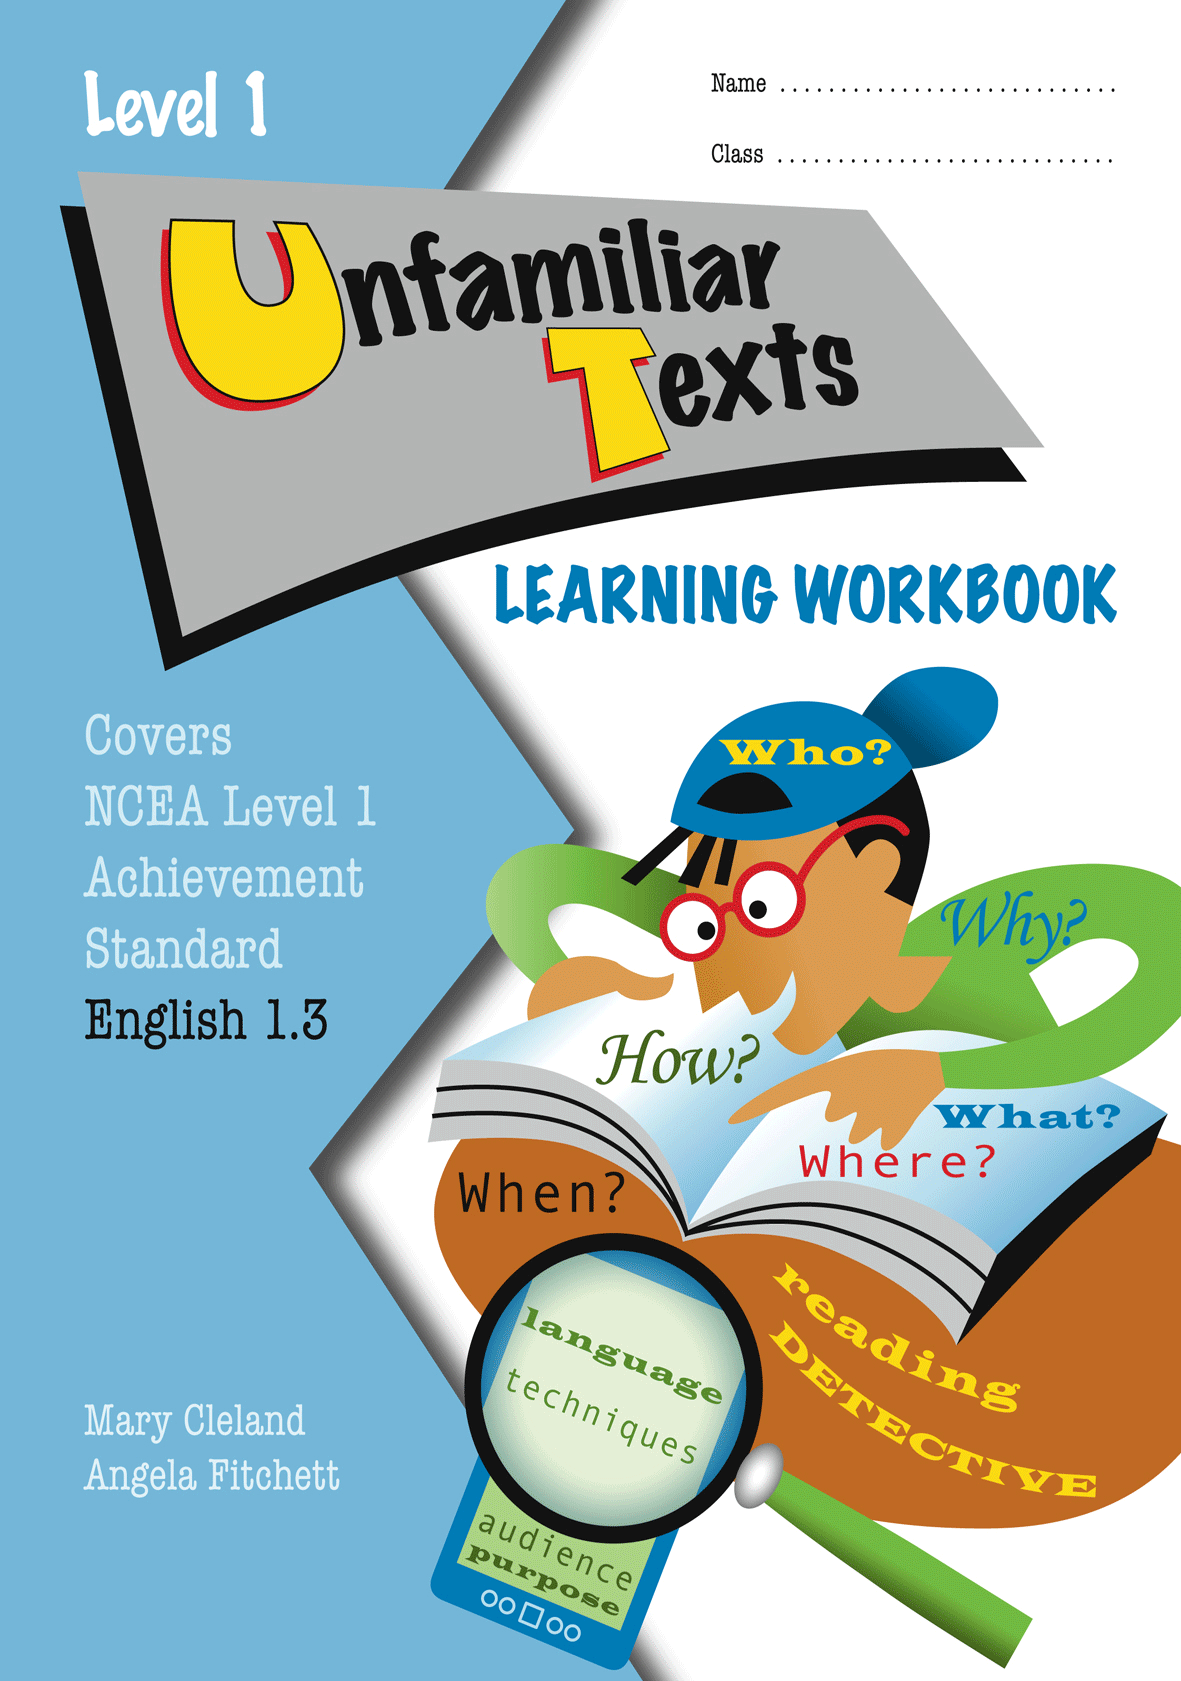 Level 1 Unfamiliar Texts 1.3 Learning Workbook